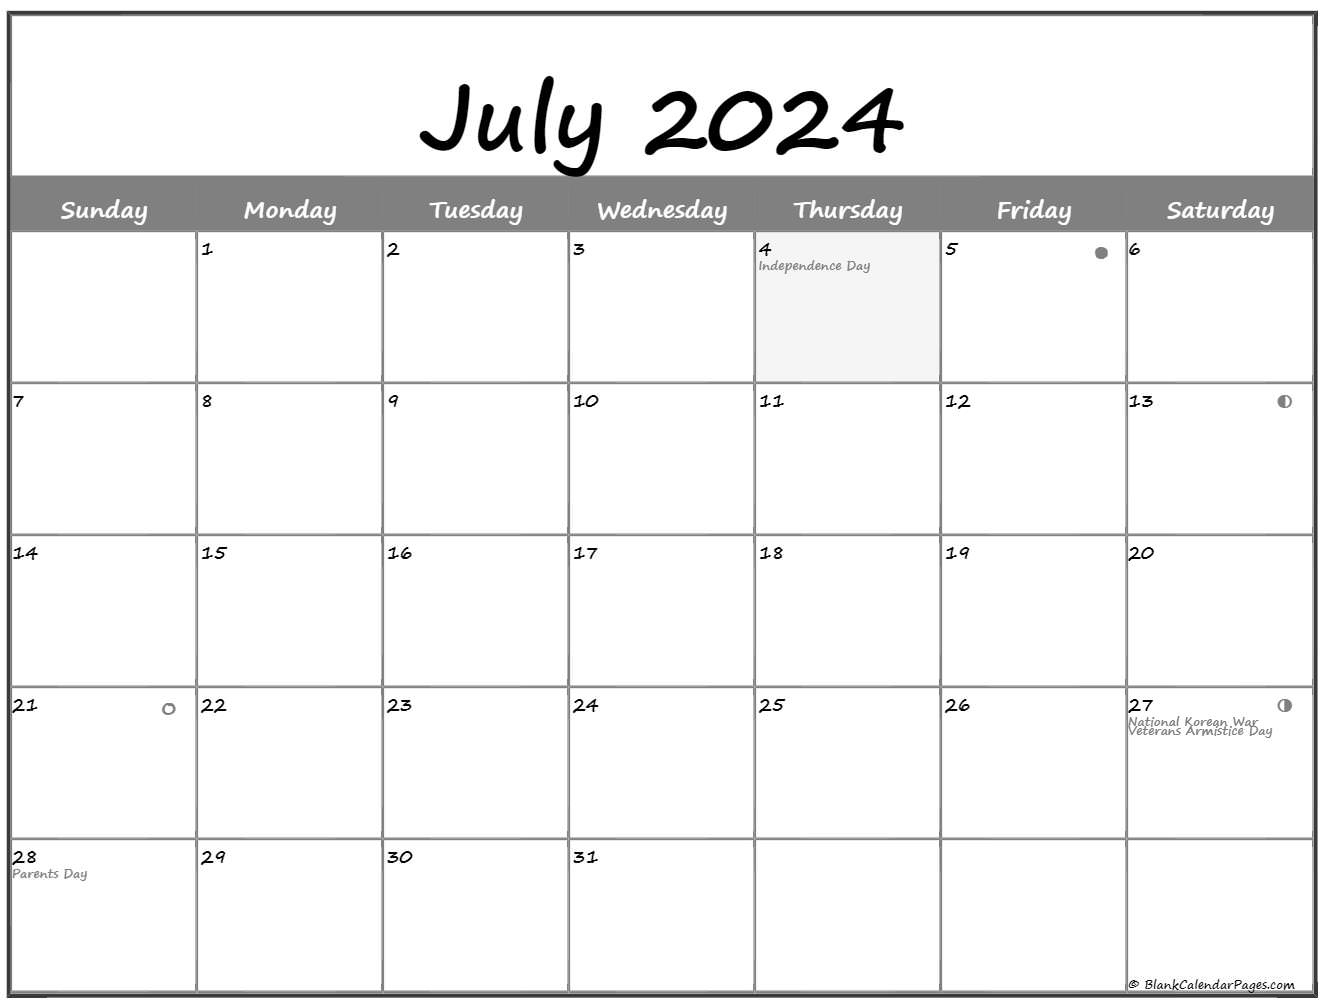 July 2024 Lunar Calendar | Moon Phase Calendar | Full Moon Calendar For July 2024